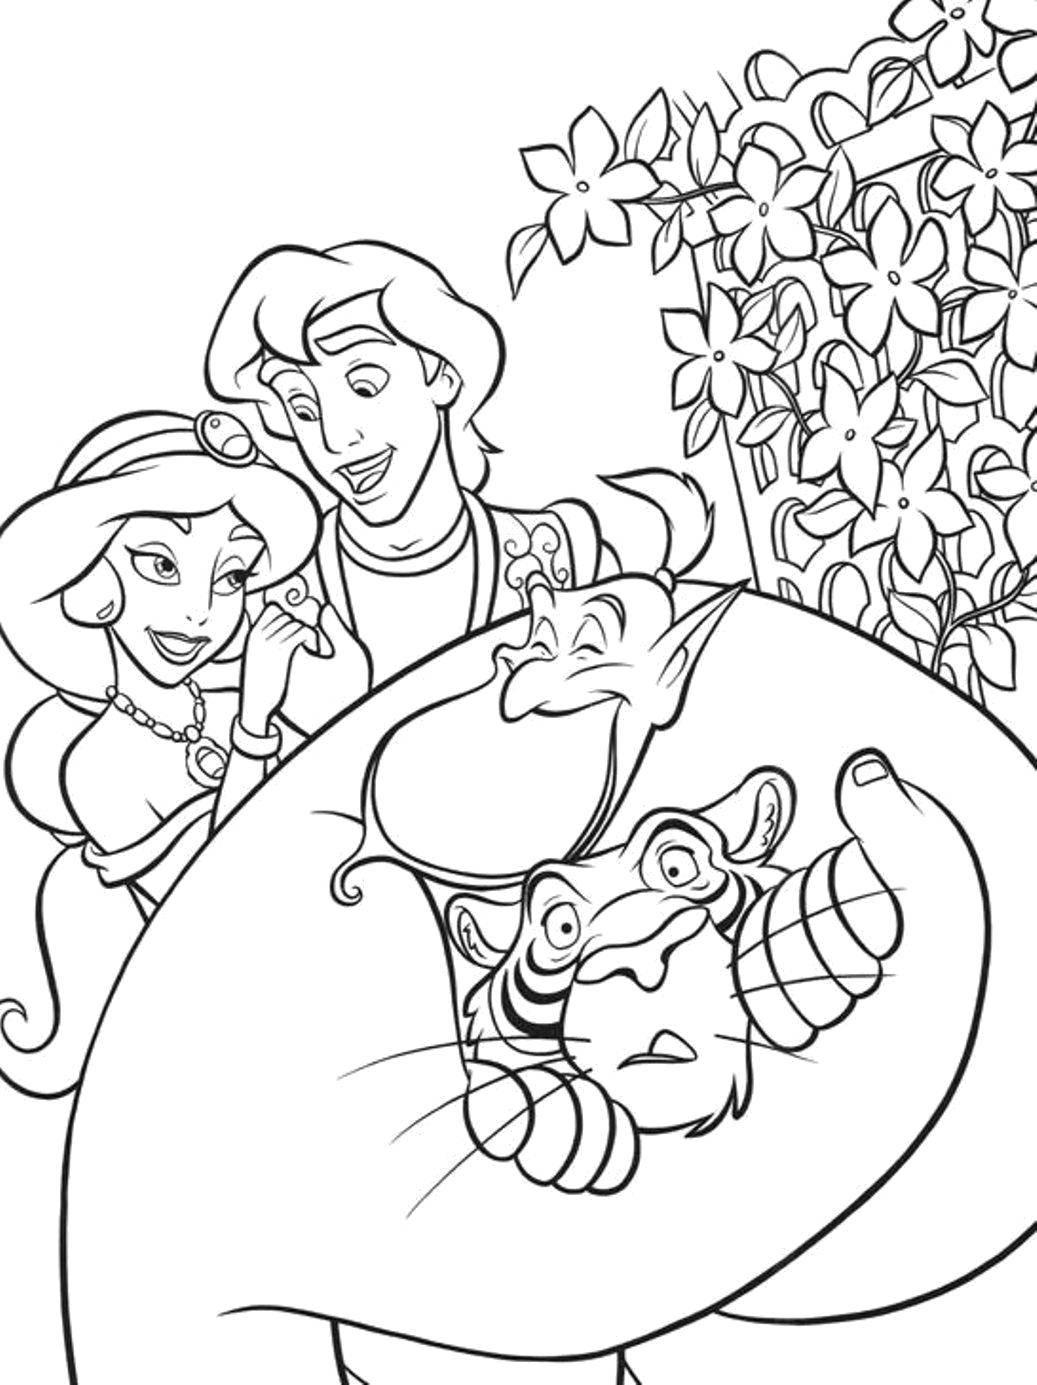 Coloring Aladdin, Genie and Jasmine. Category cartoons. Tags:  Disney, Aladdin, Jasmine, Genie.